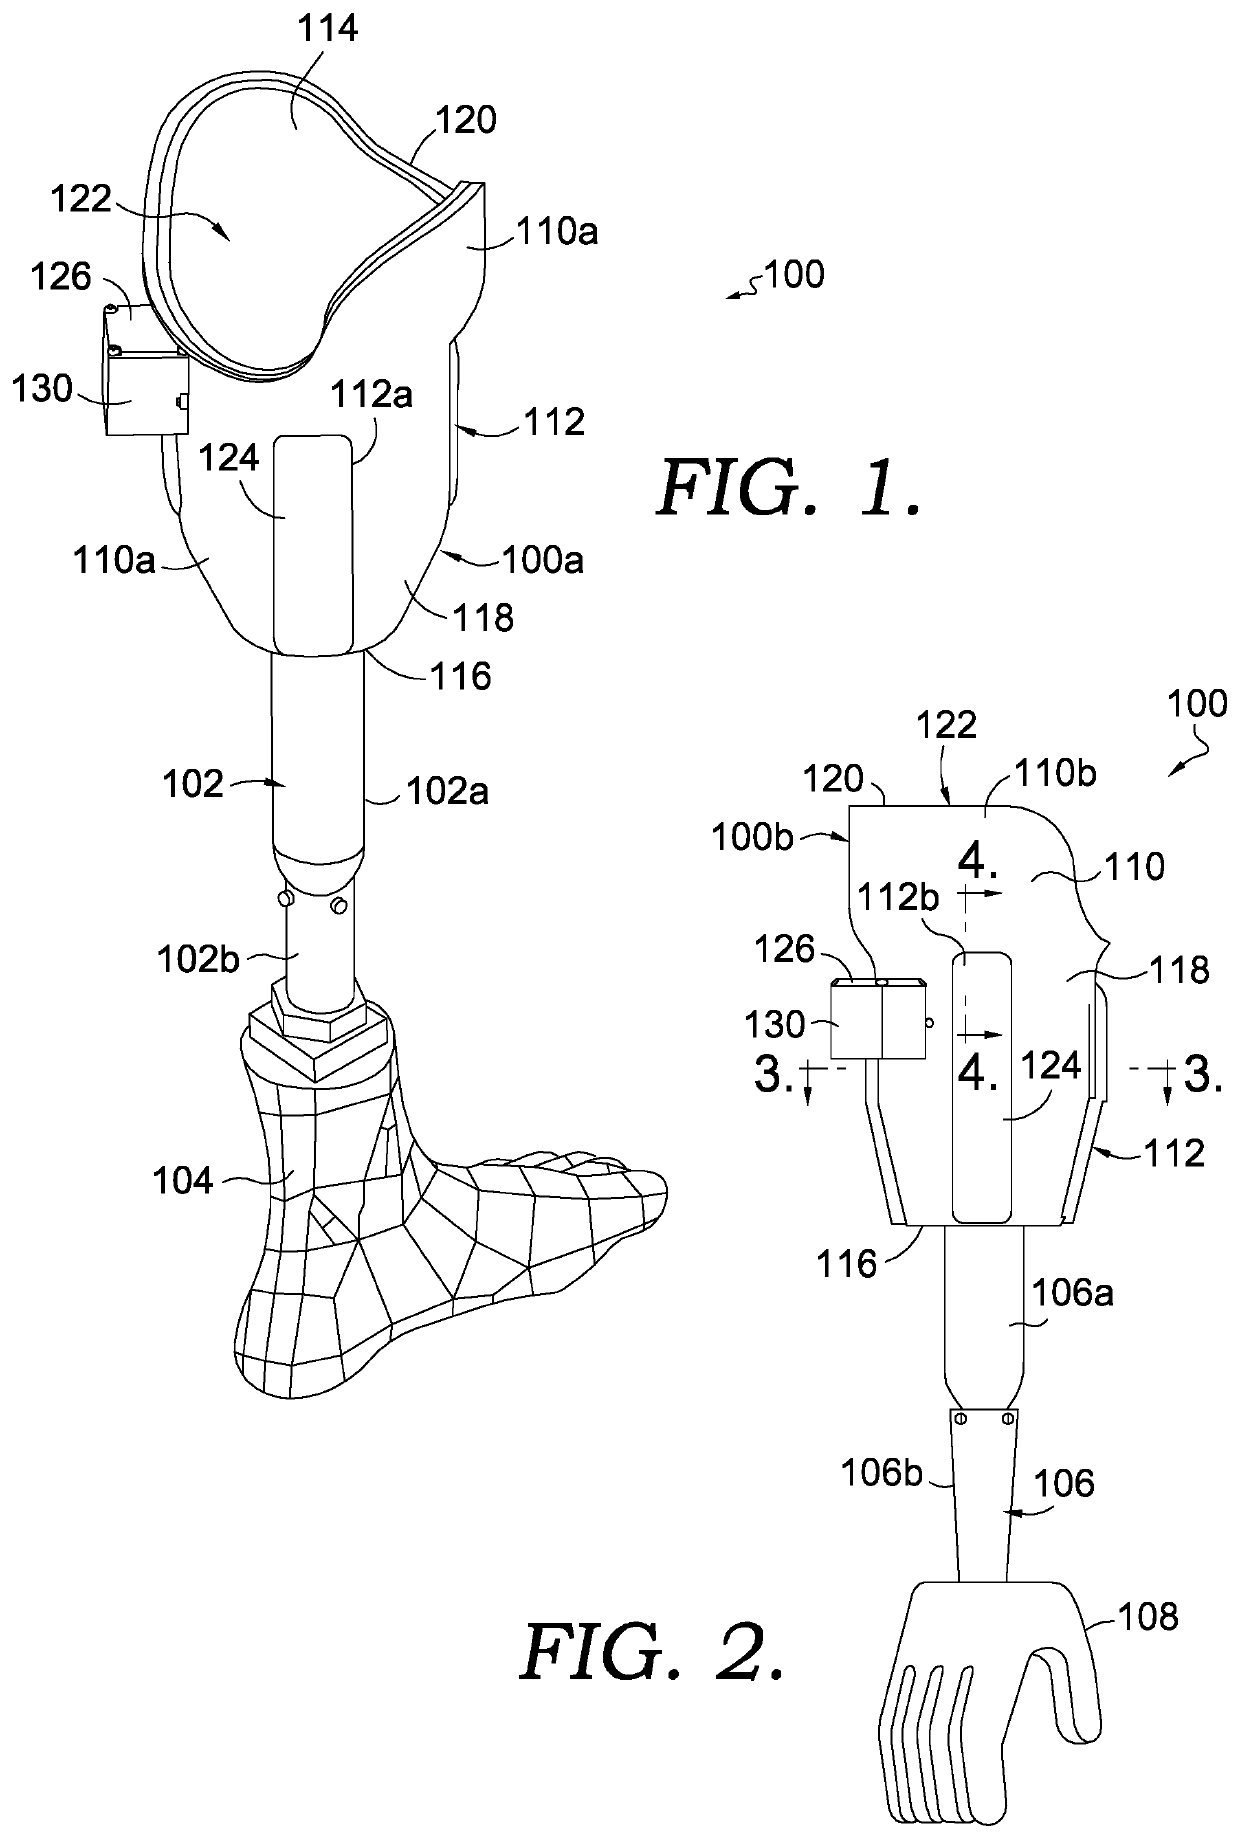 Temperature regulating apparatus for a prosthetic limb